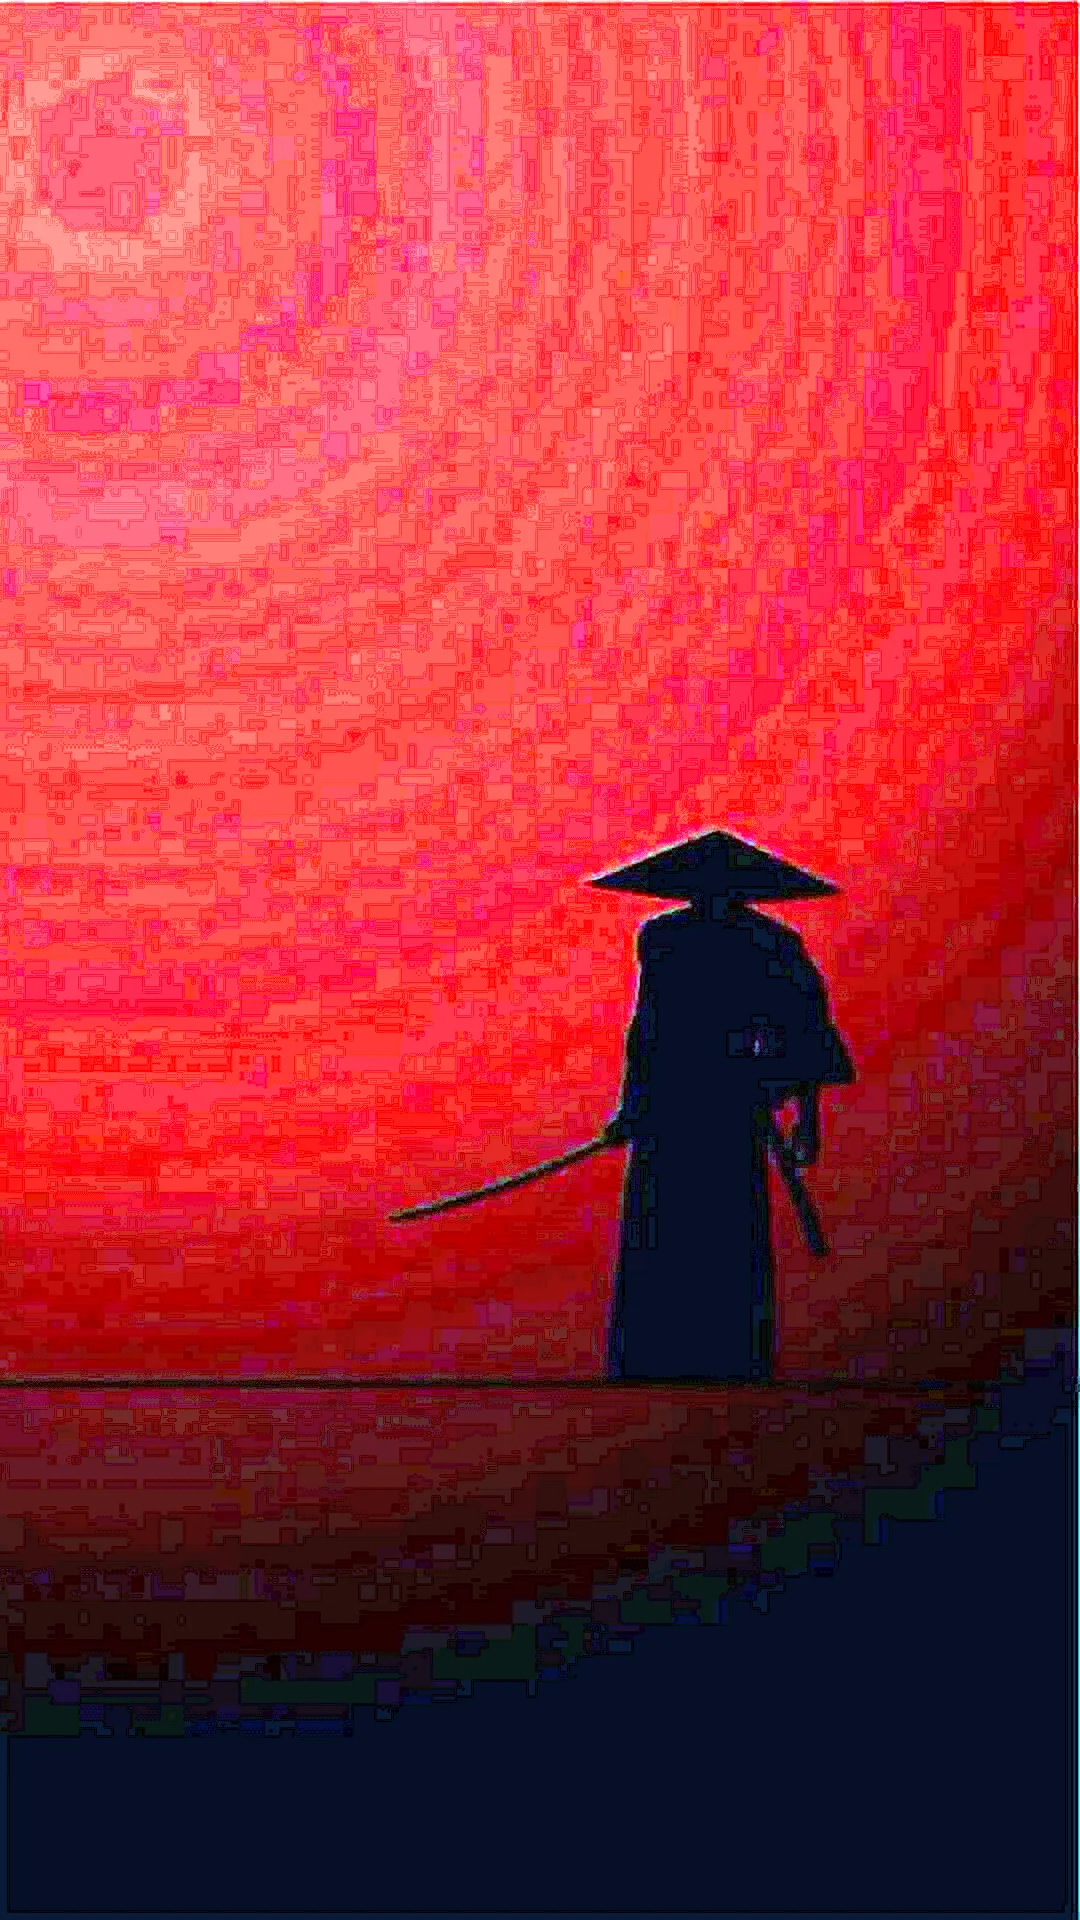 Samurai iPhone Wallpaper For iPhone